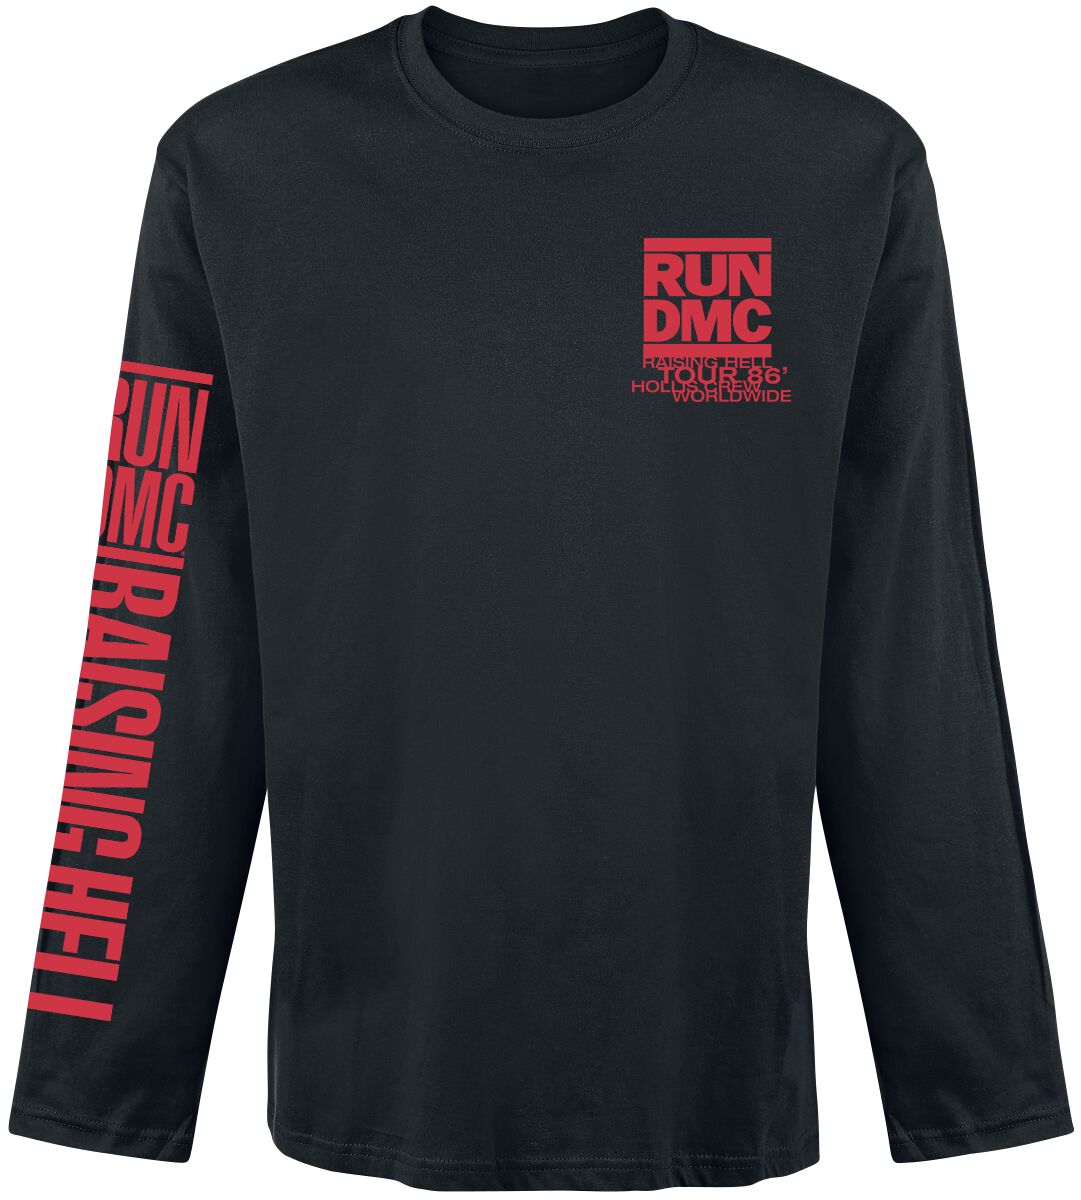 Run DMC Raising Hell Tour 86 Langarmshirt schwarz in S